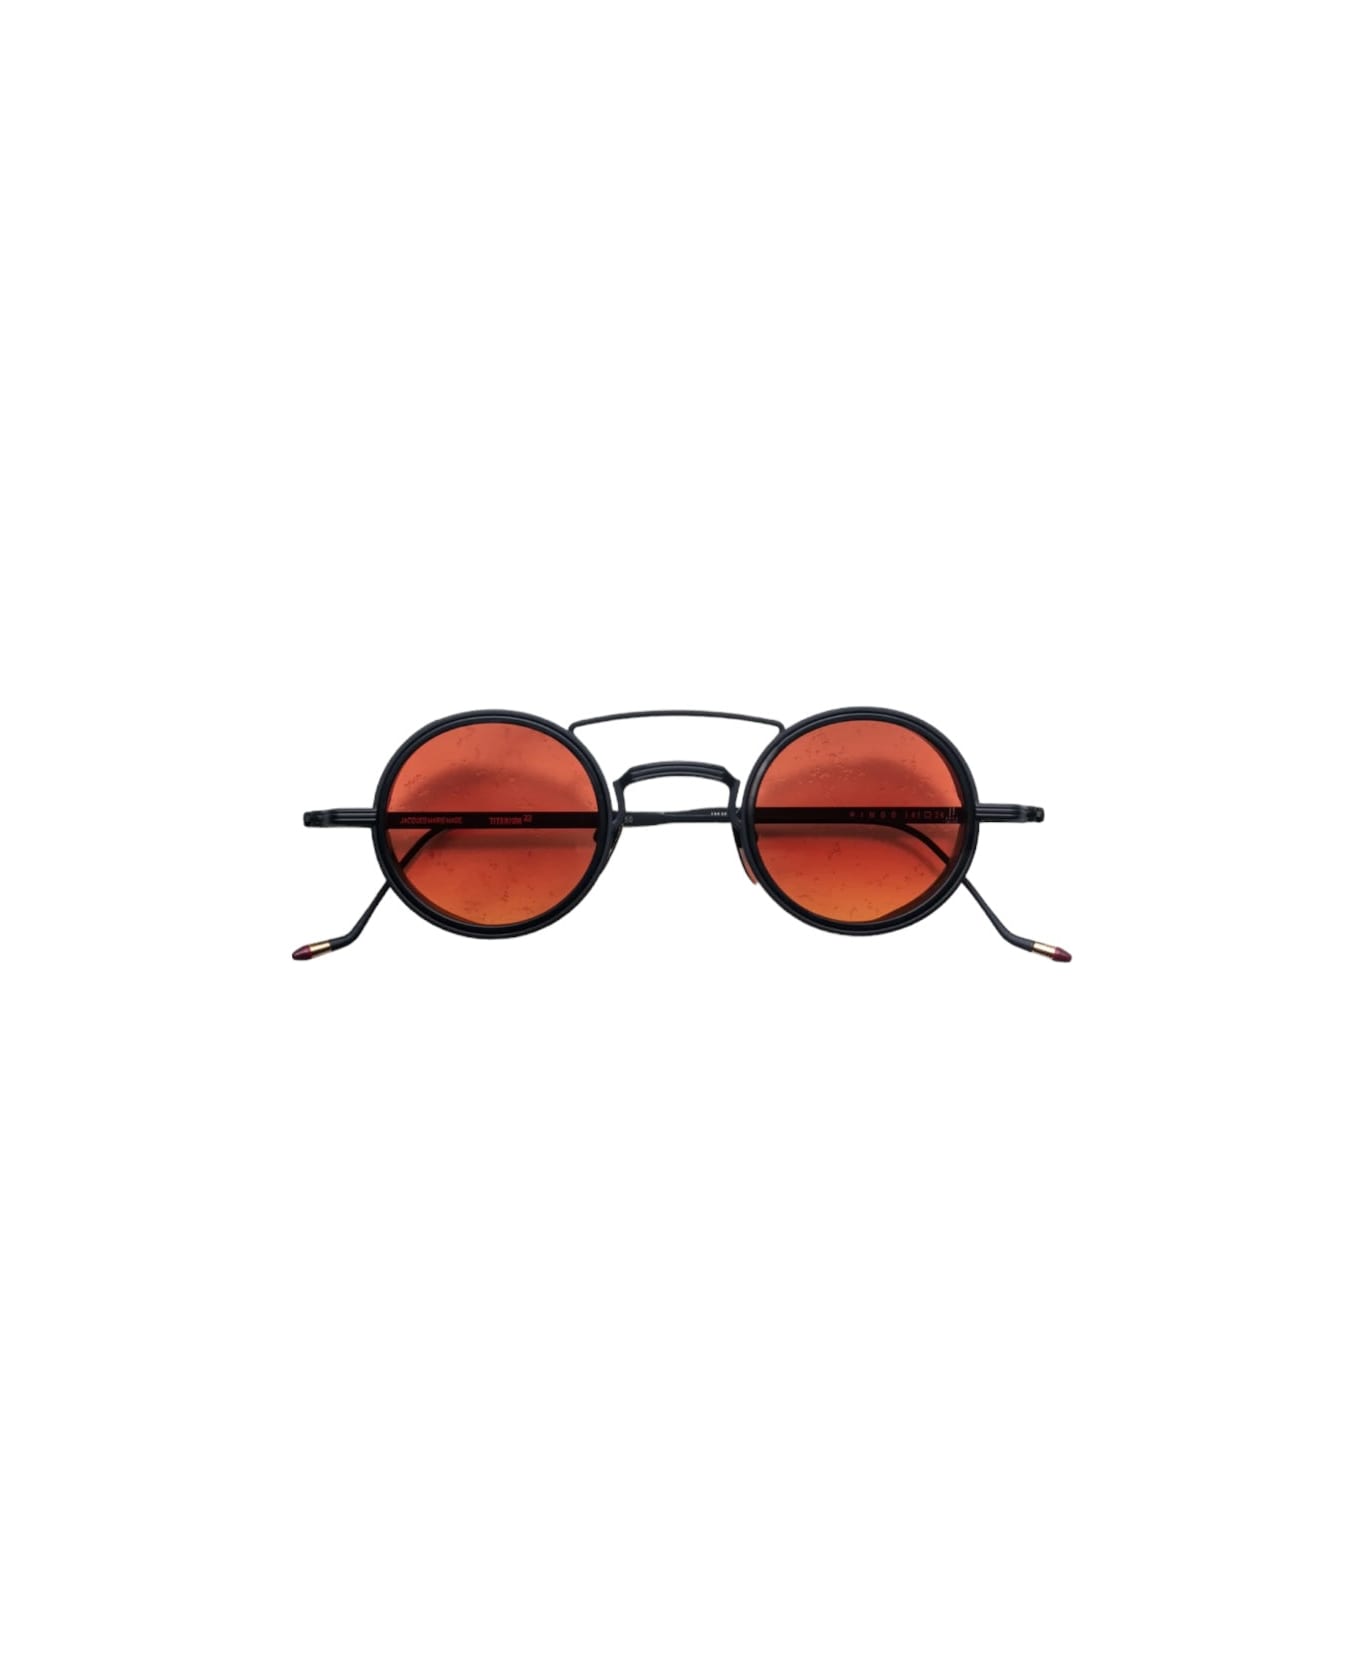 Jacques Marie Mage Ringo - Tropic Sunglasses